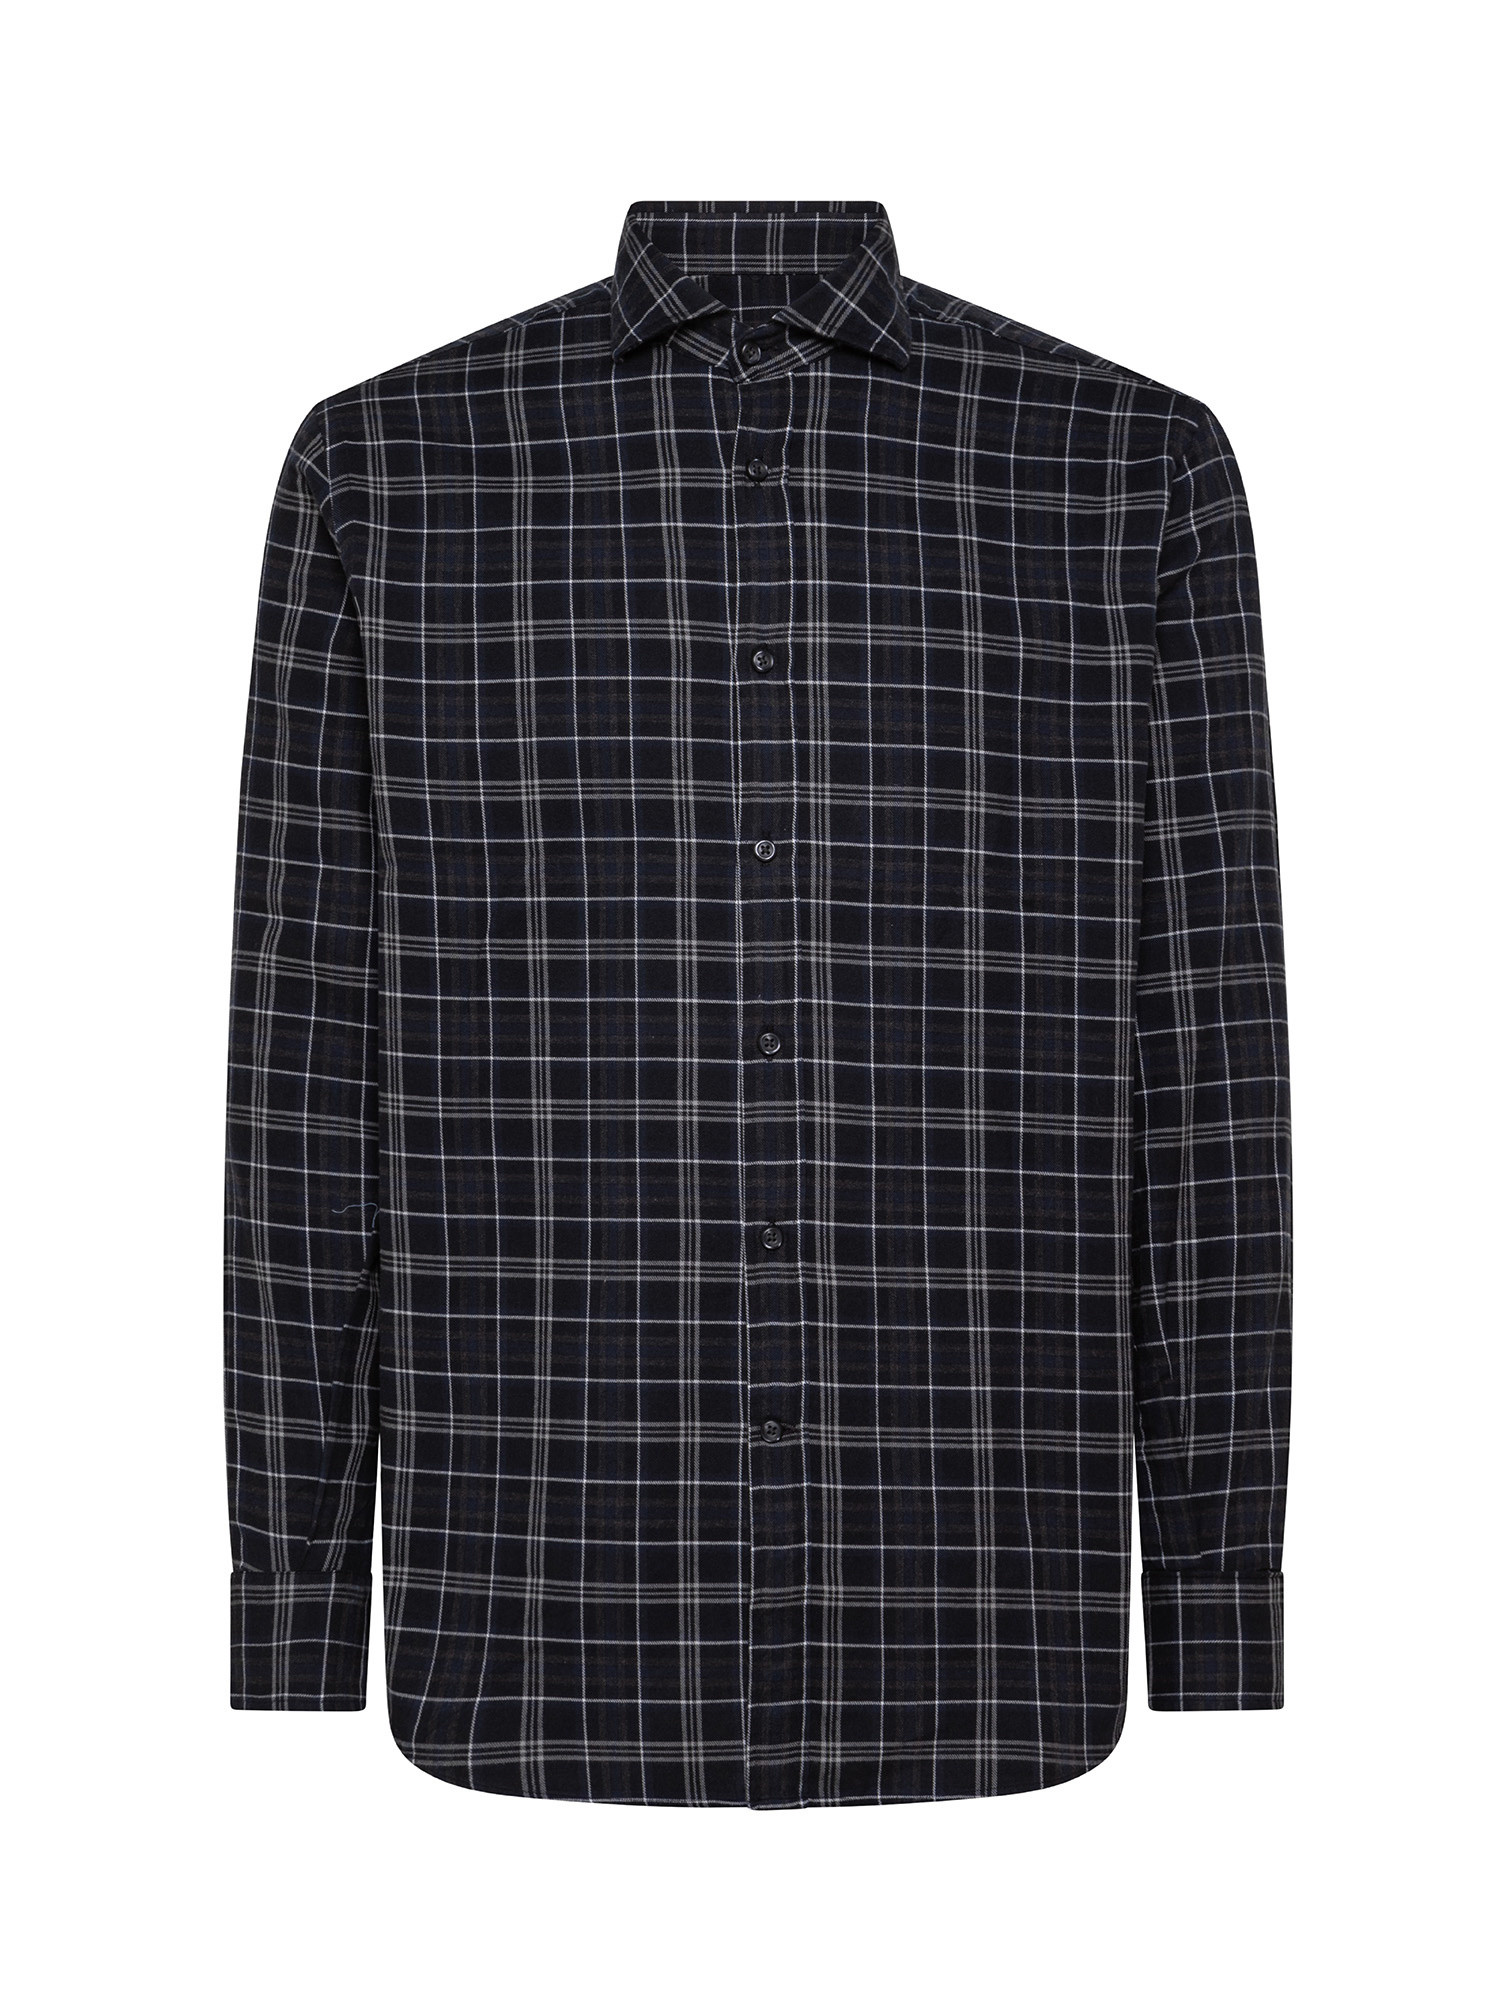 Regular fit shirt in soft organic cotton flannel, Blue, large image number 0